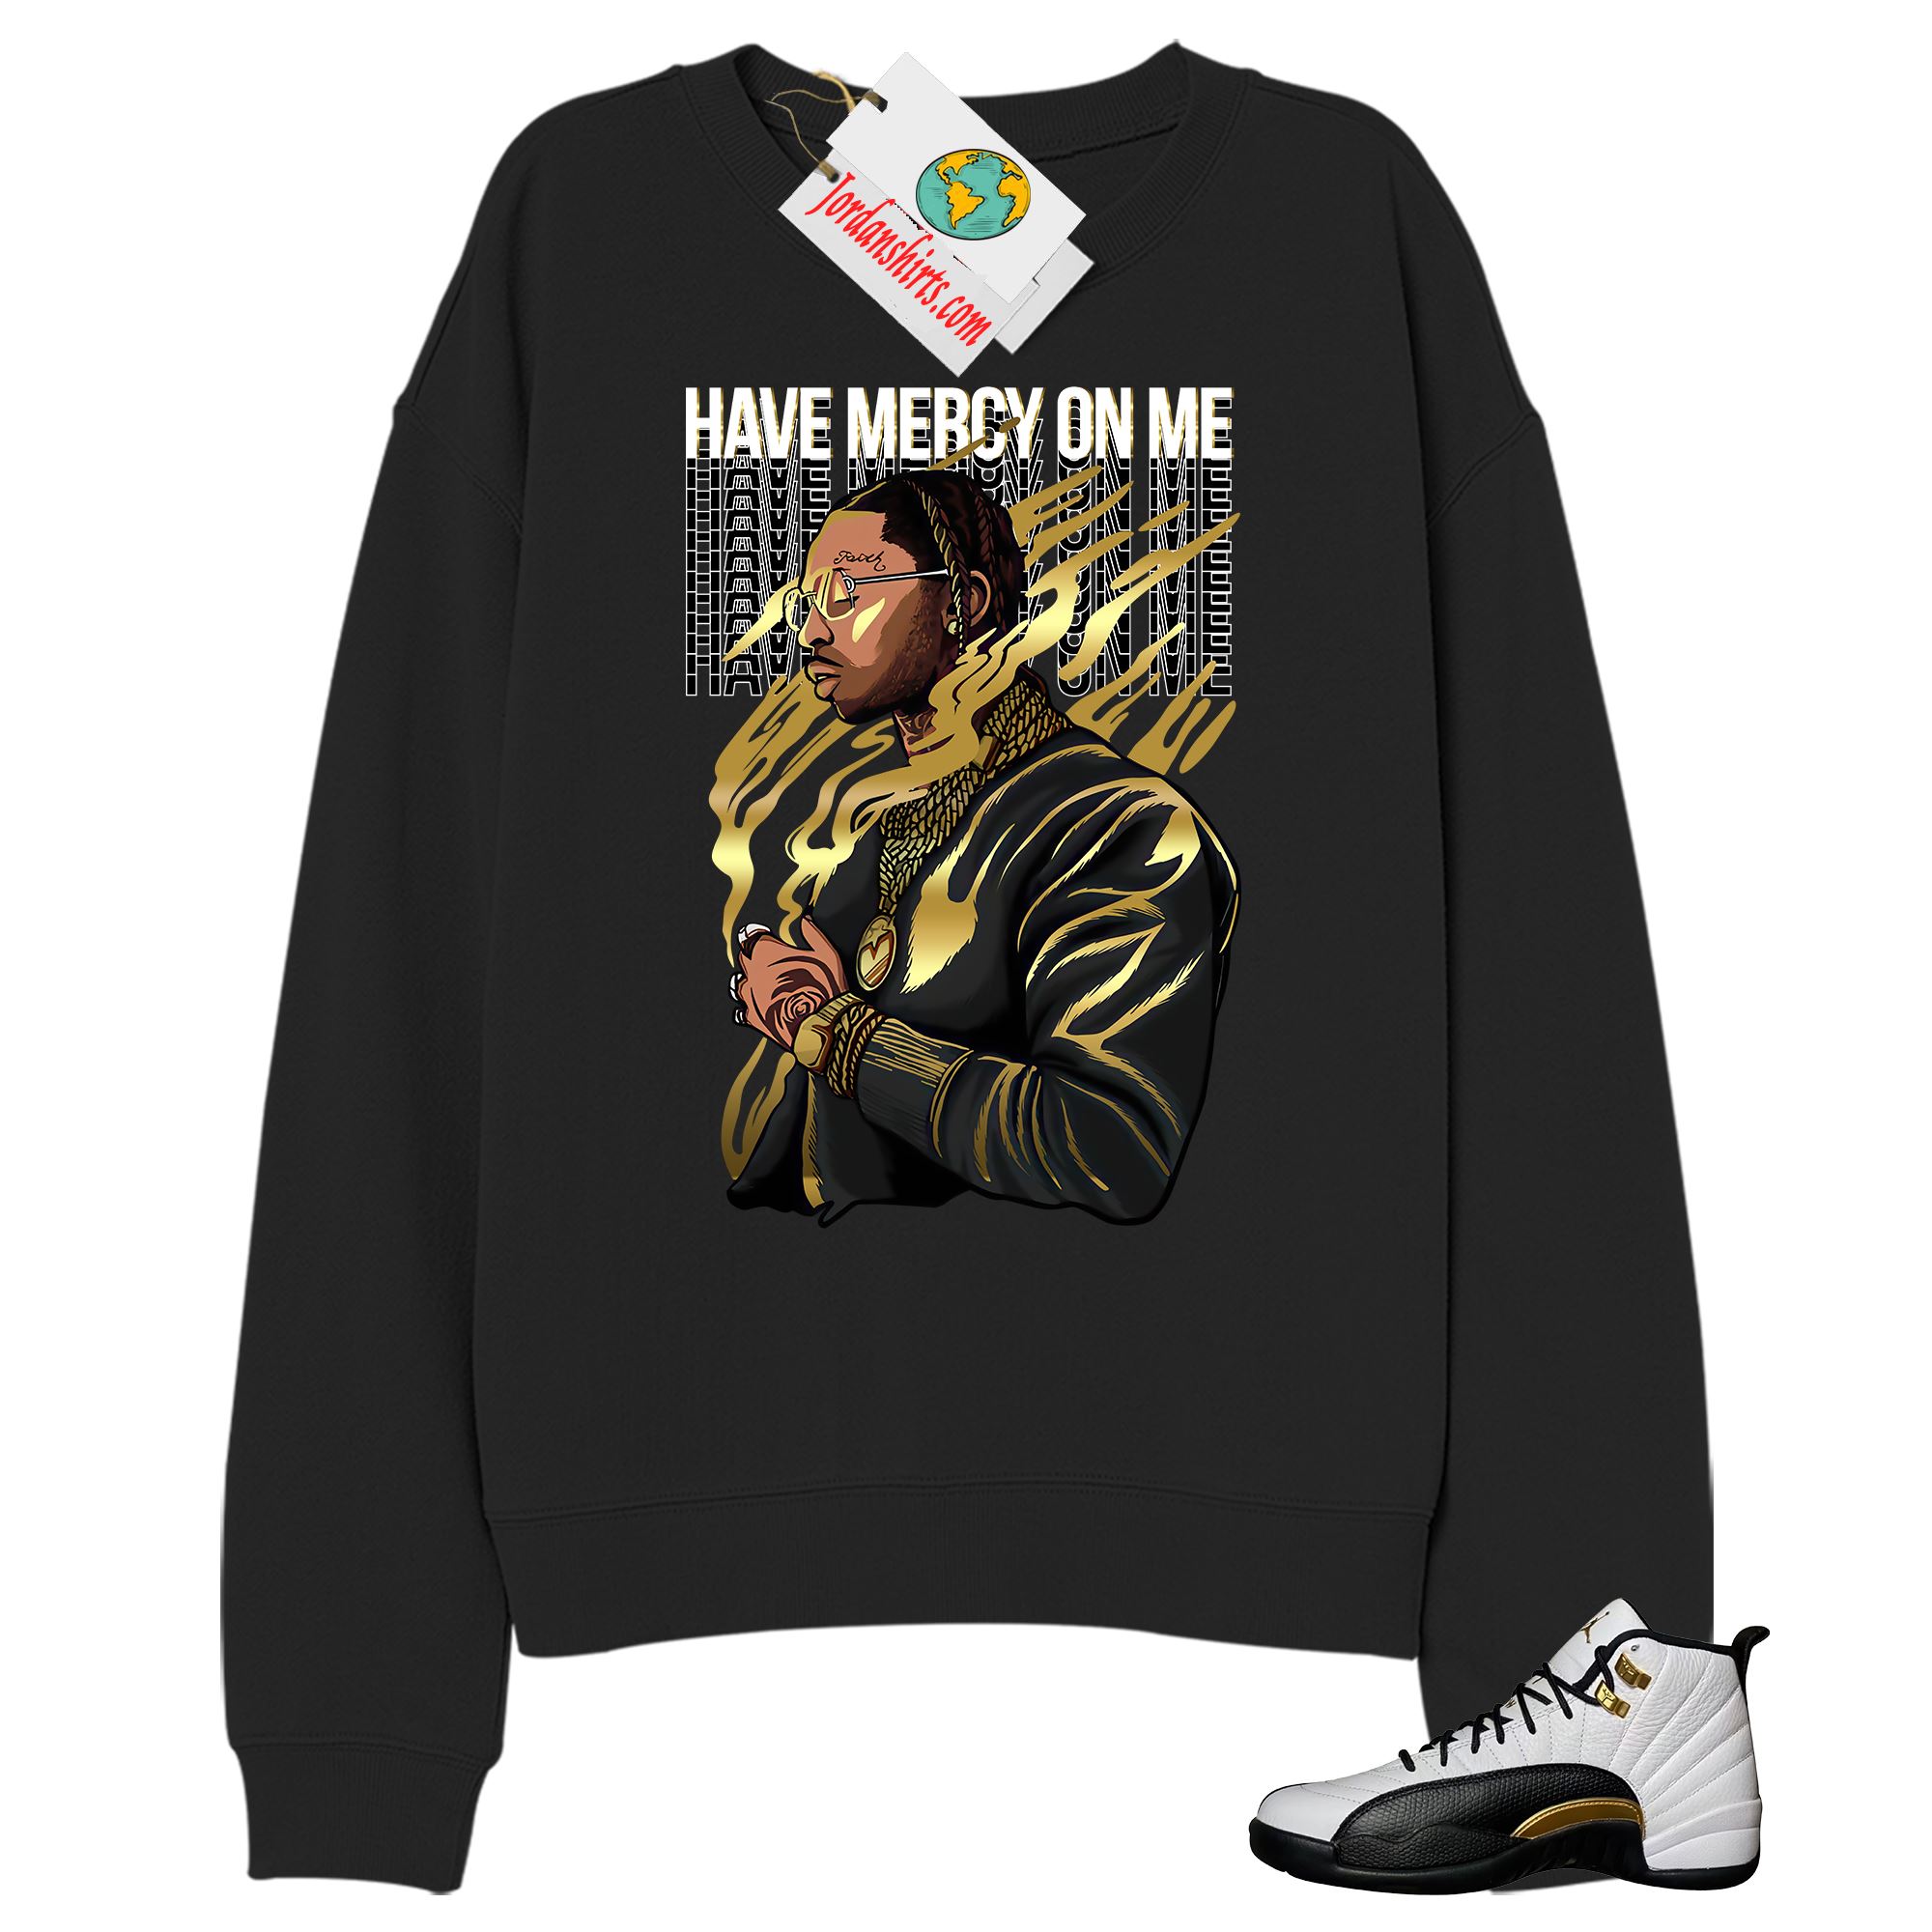 Jordan 12 Sweatshirt, Have Mercy On Me Black Sweatshirt Air Jordan 12 Royalty 12s Size Up To 5xl